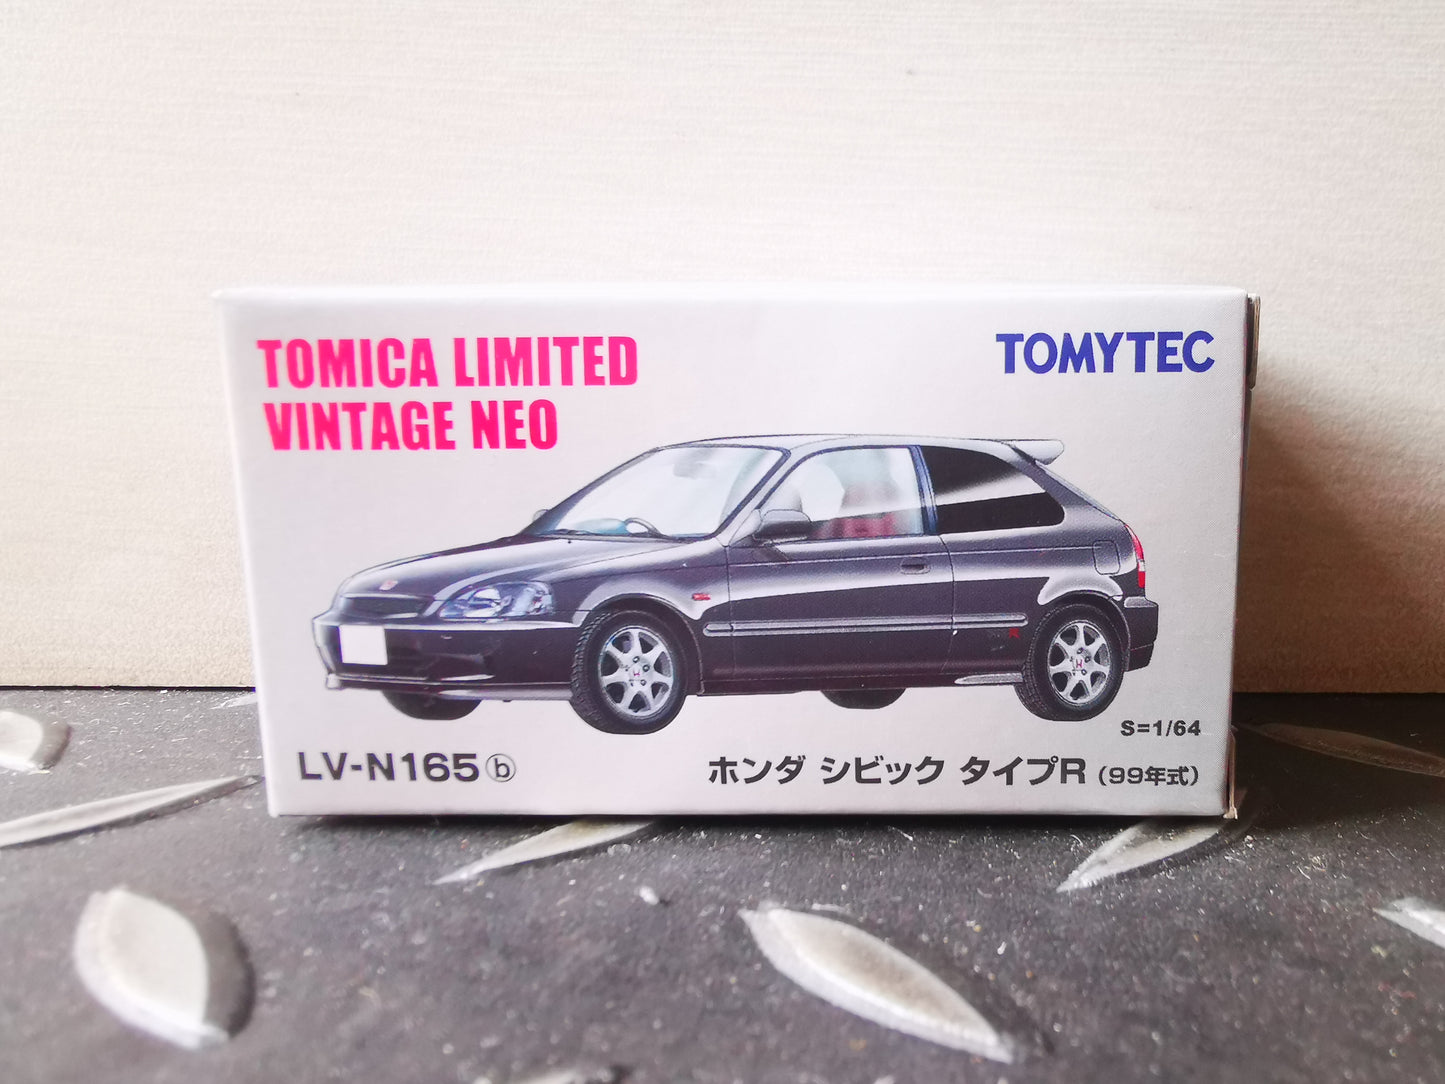 Tomica Limited Vintage Neo LV-N165b Honda Civic EK9 TypeR Black 99